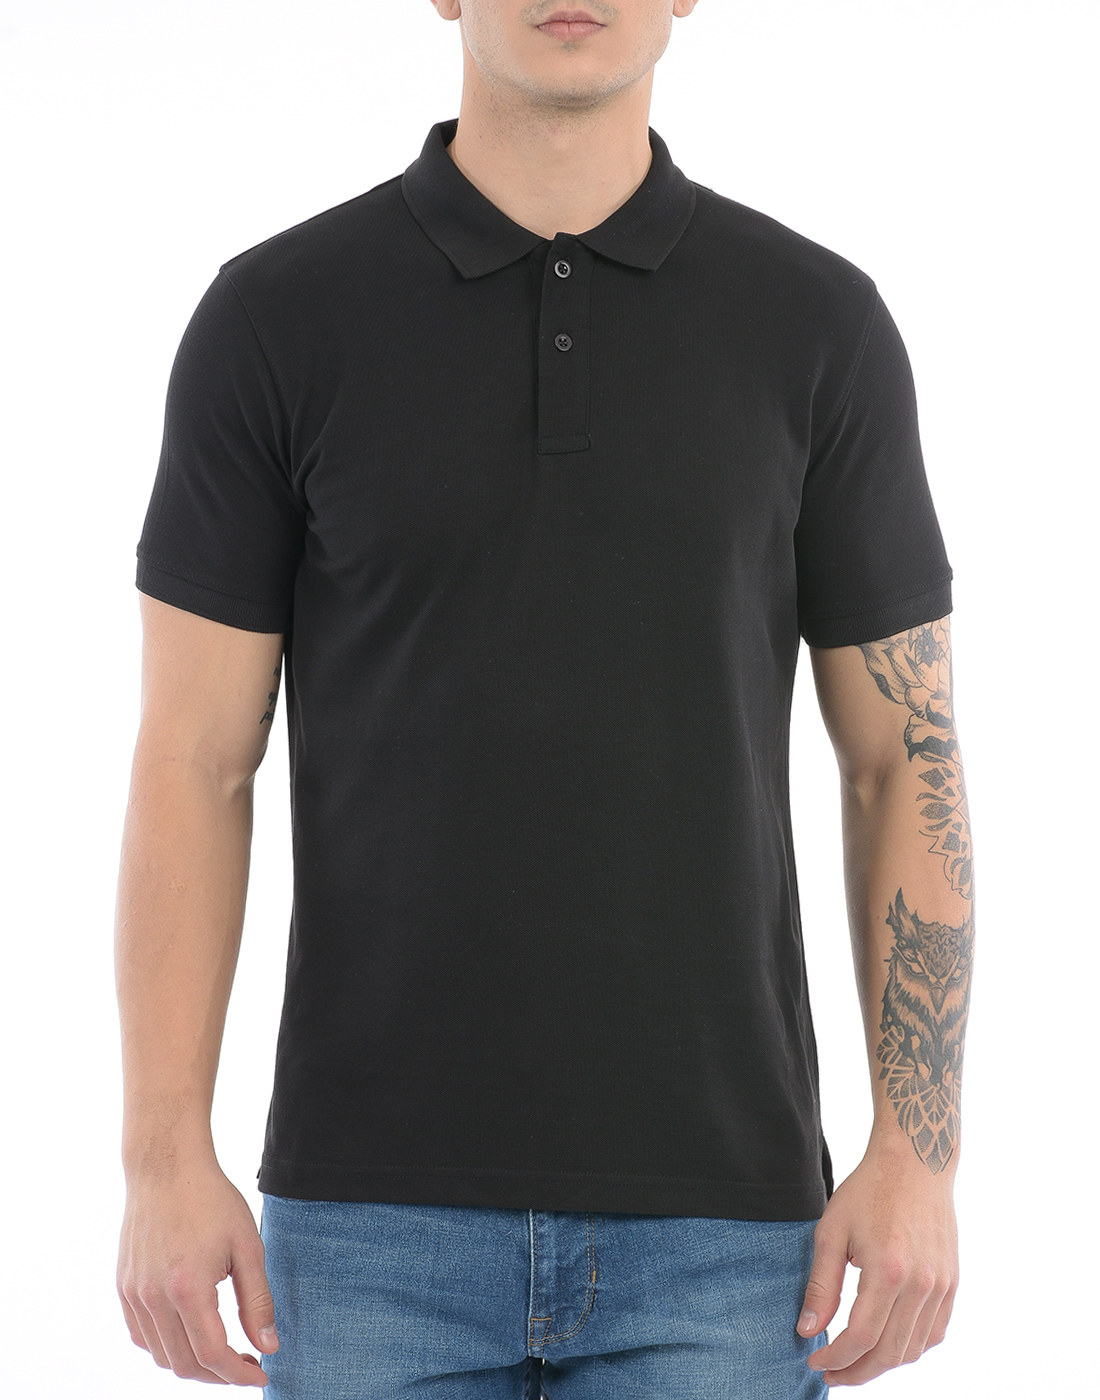 ONEWAY Men Solid Black T-Shirt